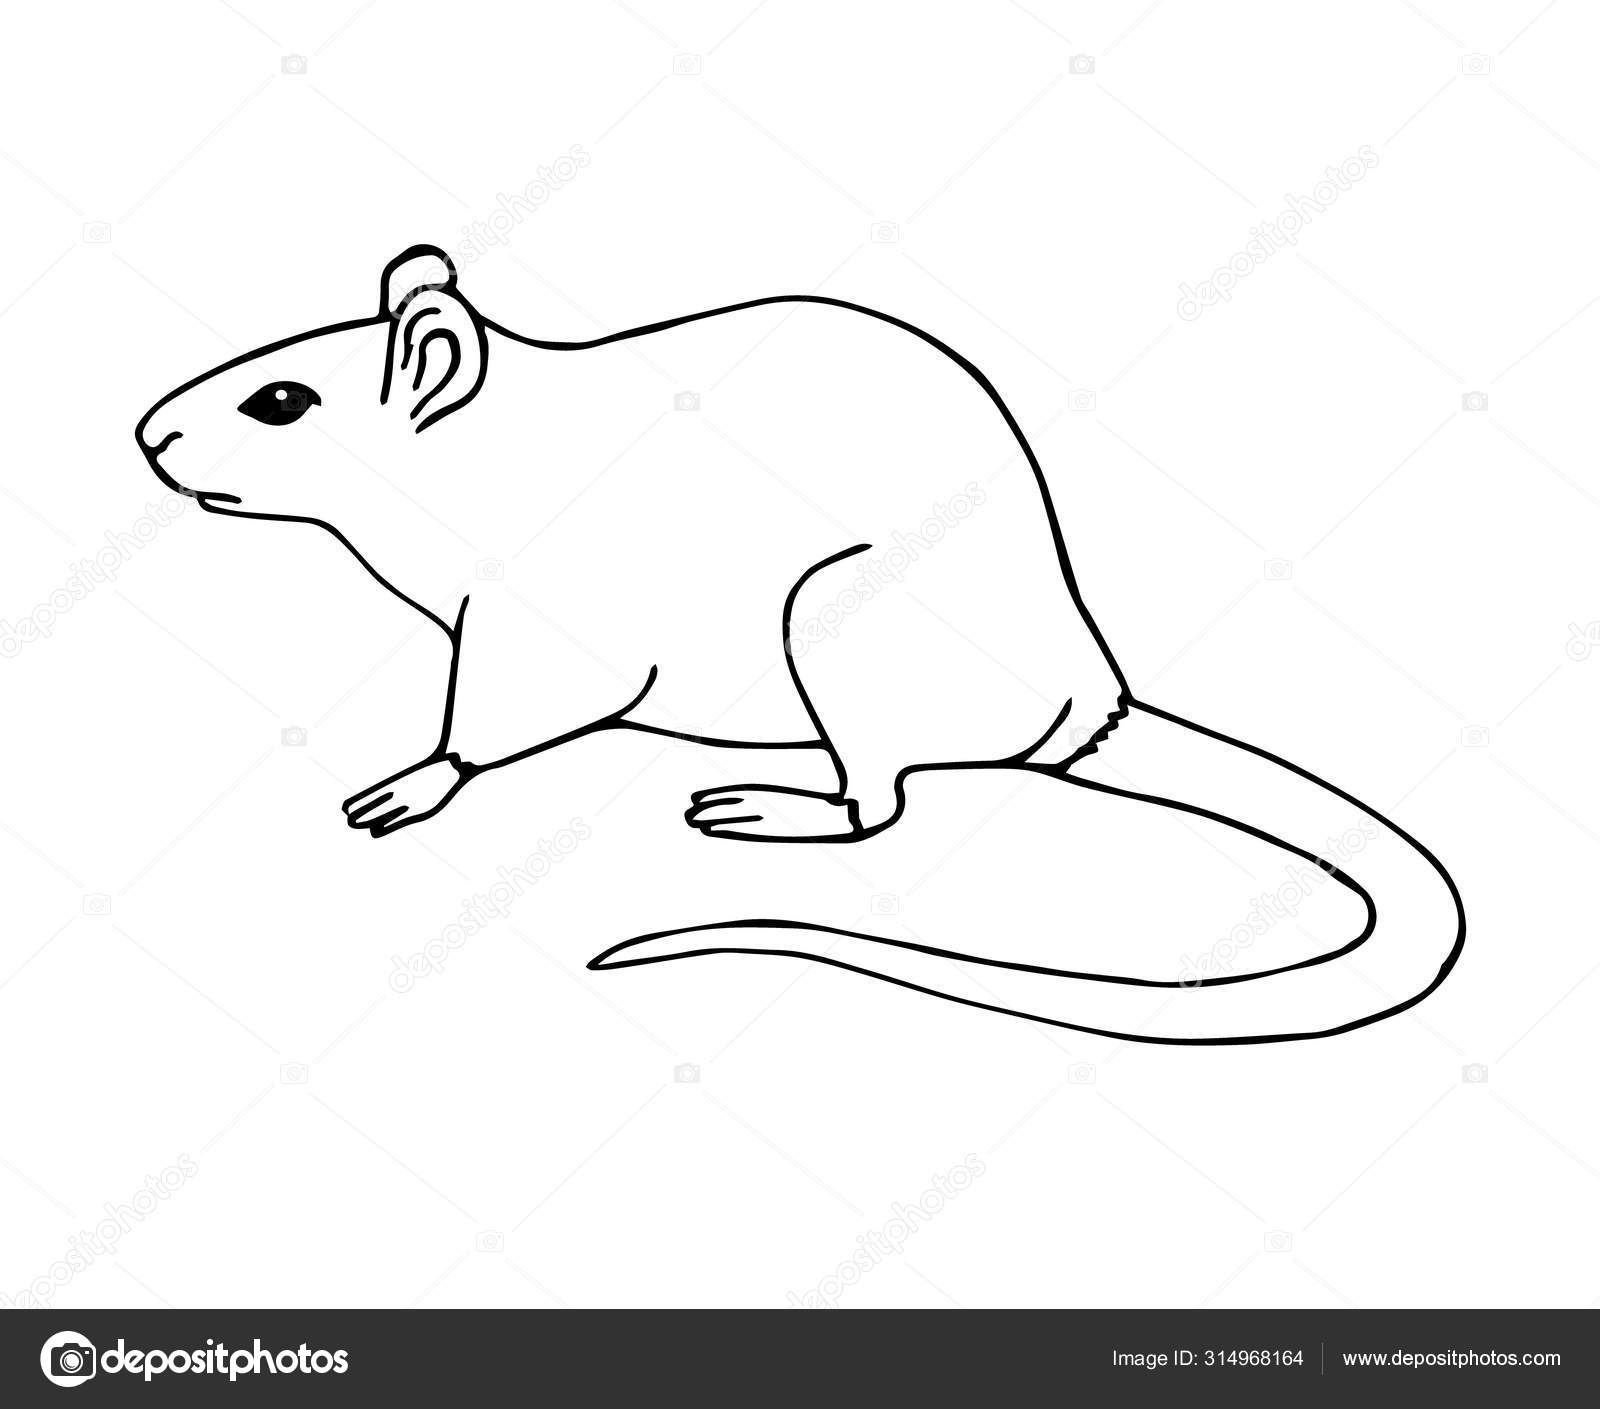 Cute Rat Drawing - Cute Rat - Posters and Art Prints | TeePublic